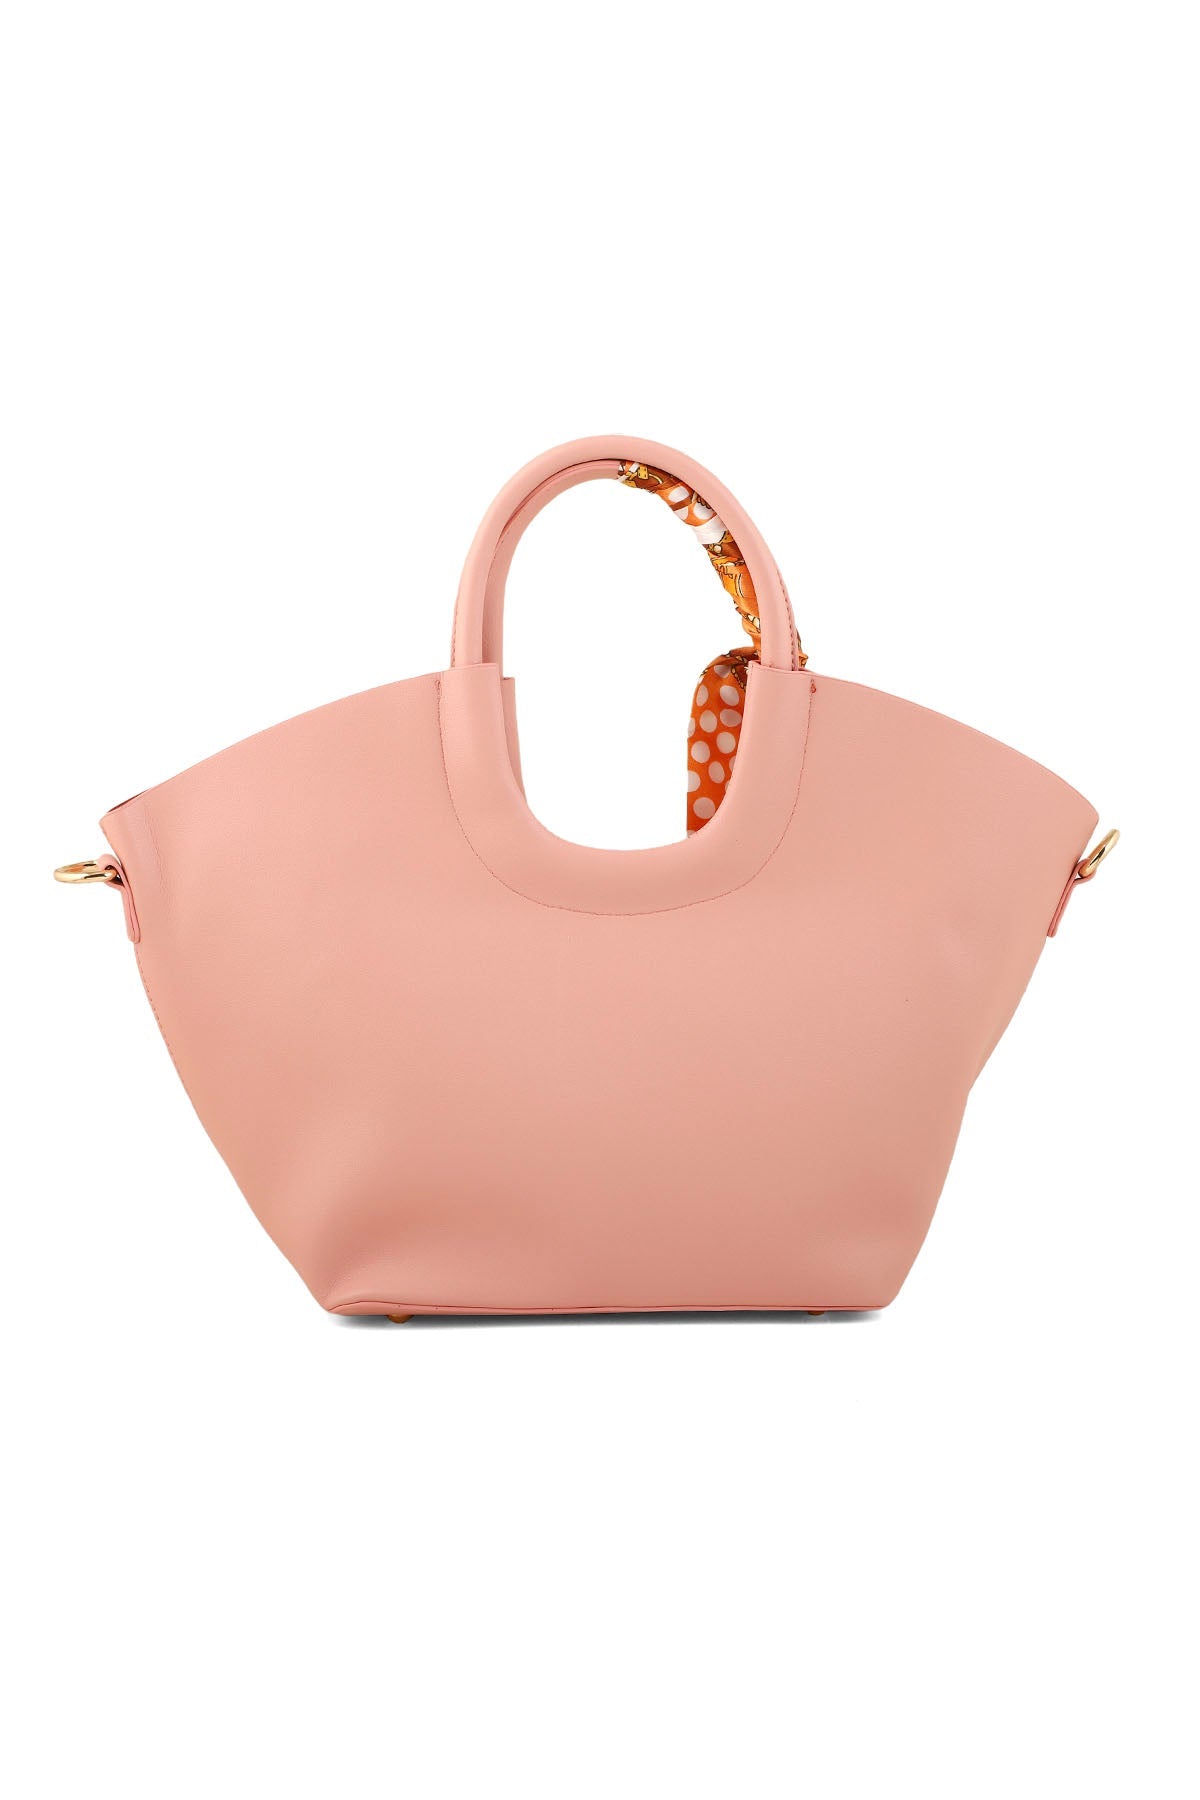 Hobo Hand Bags B15136-Pink